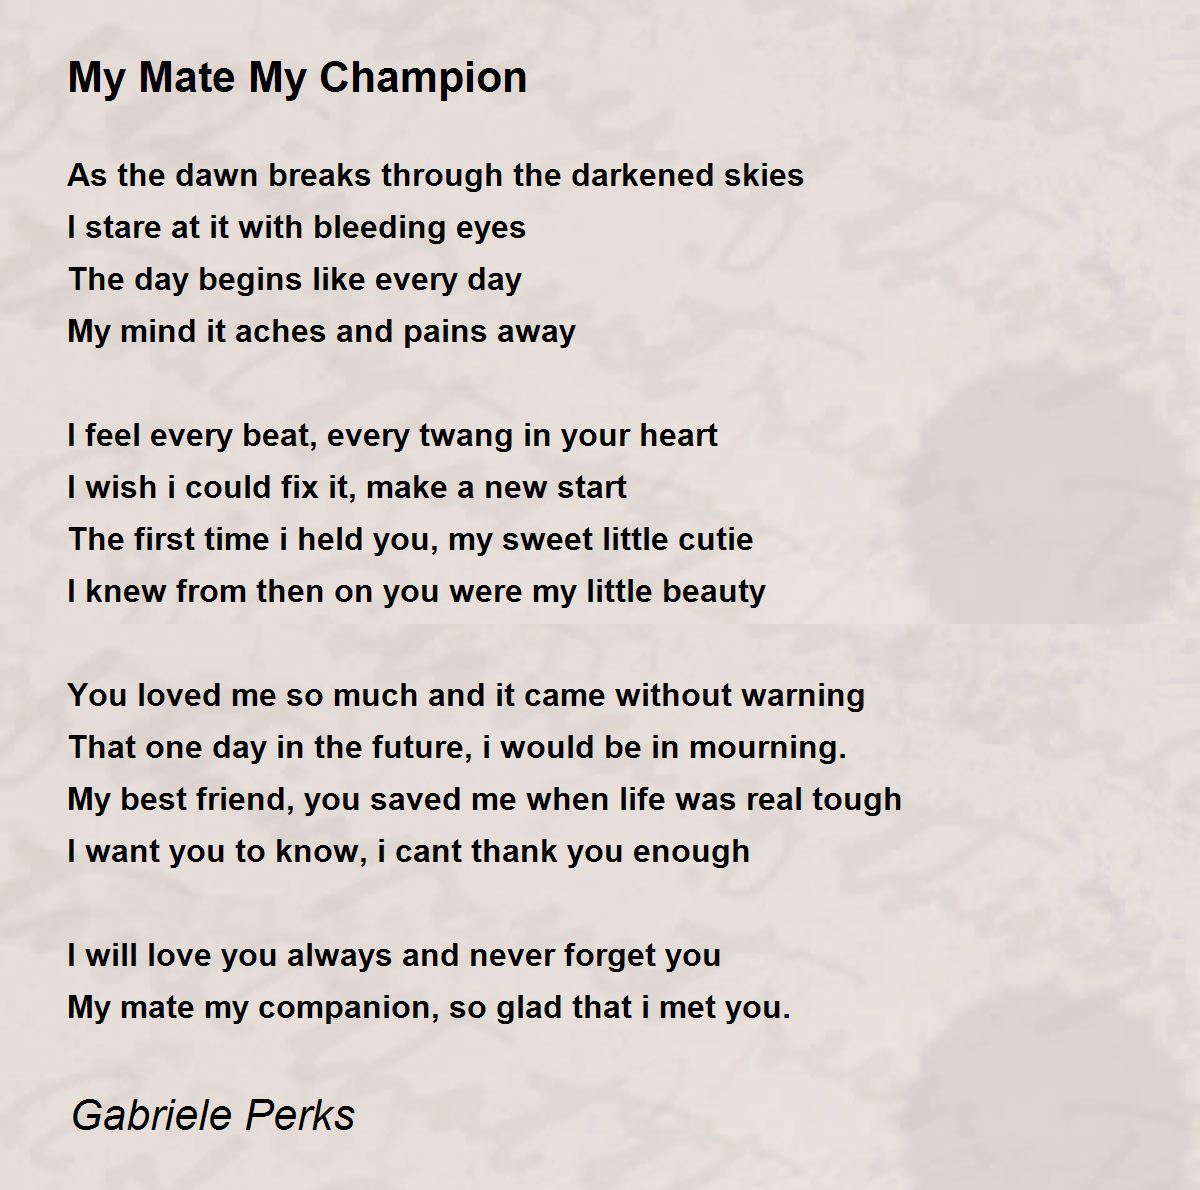 My Mate My Champion - My Mate My Champion Poem by Gabriele Perks